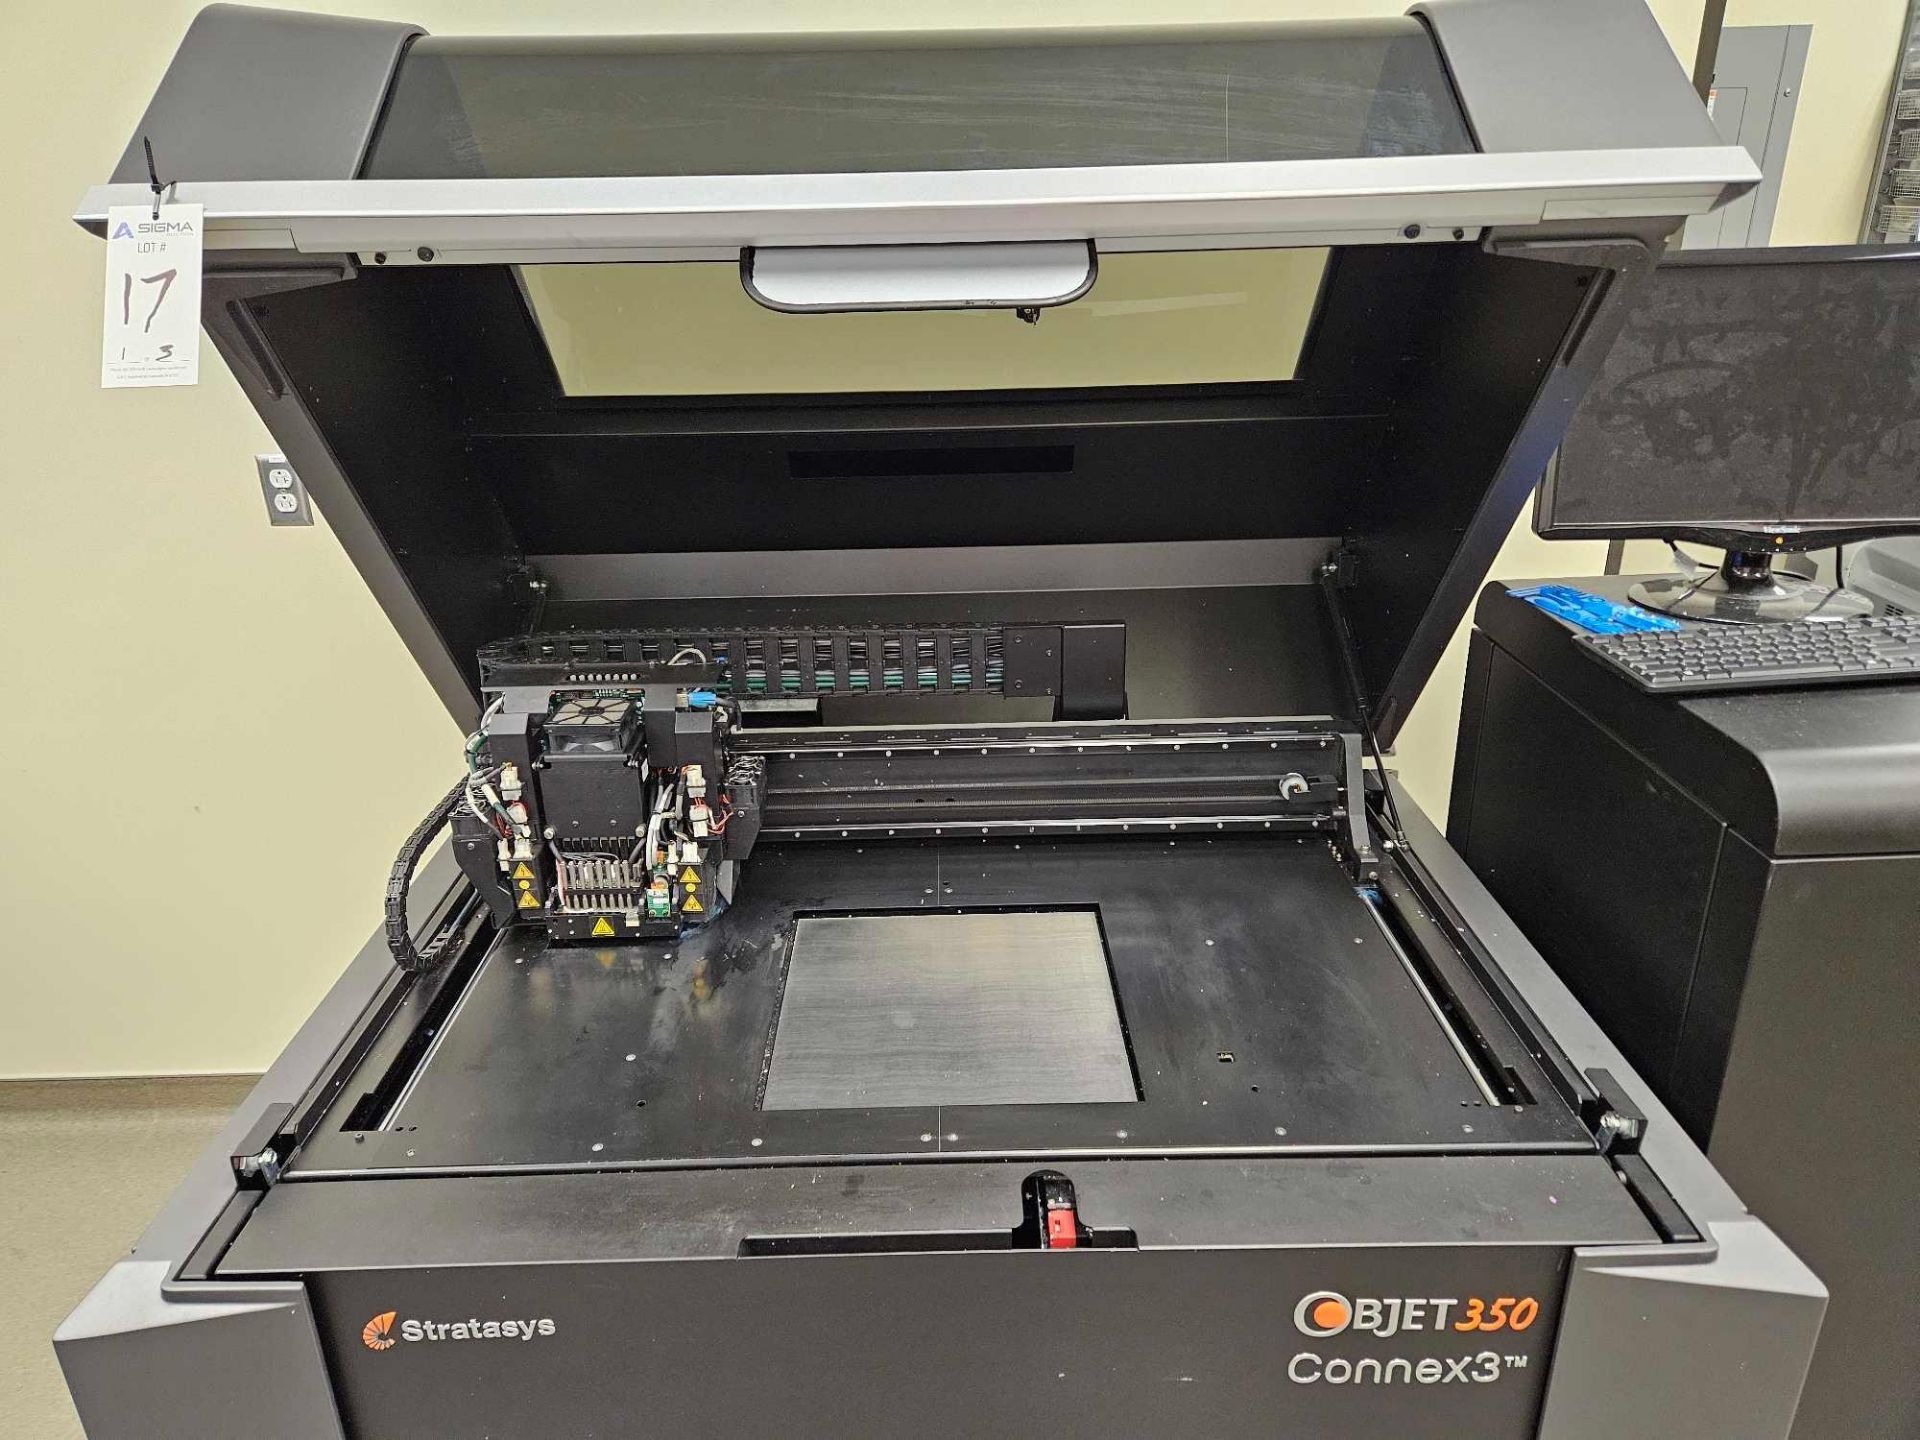 Stratasys Objet350 Connex3 3D Printer - Image 9 of 13